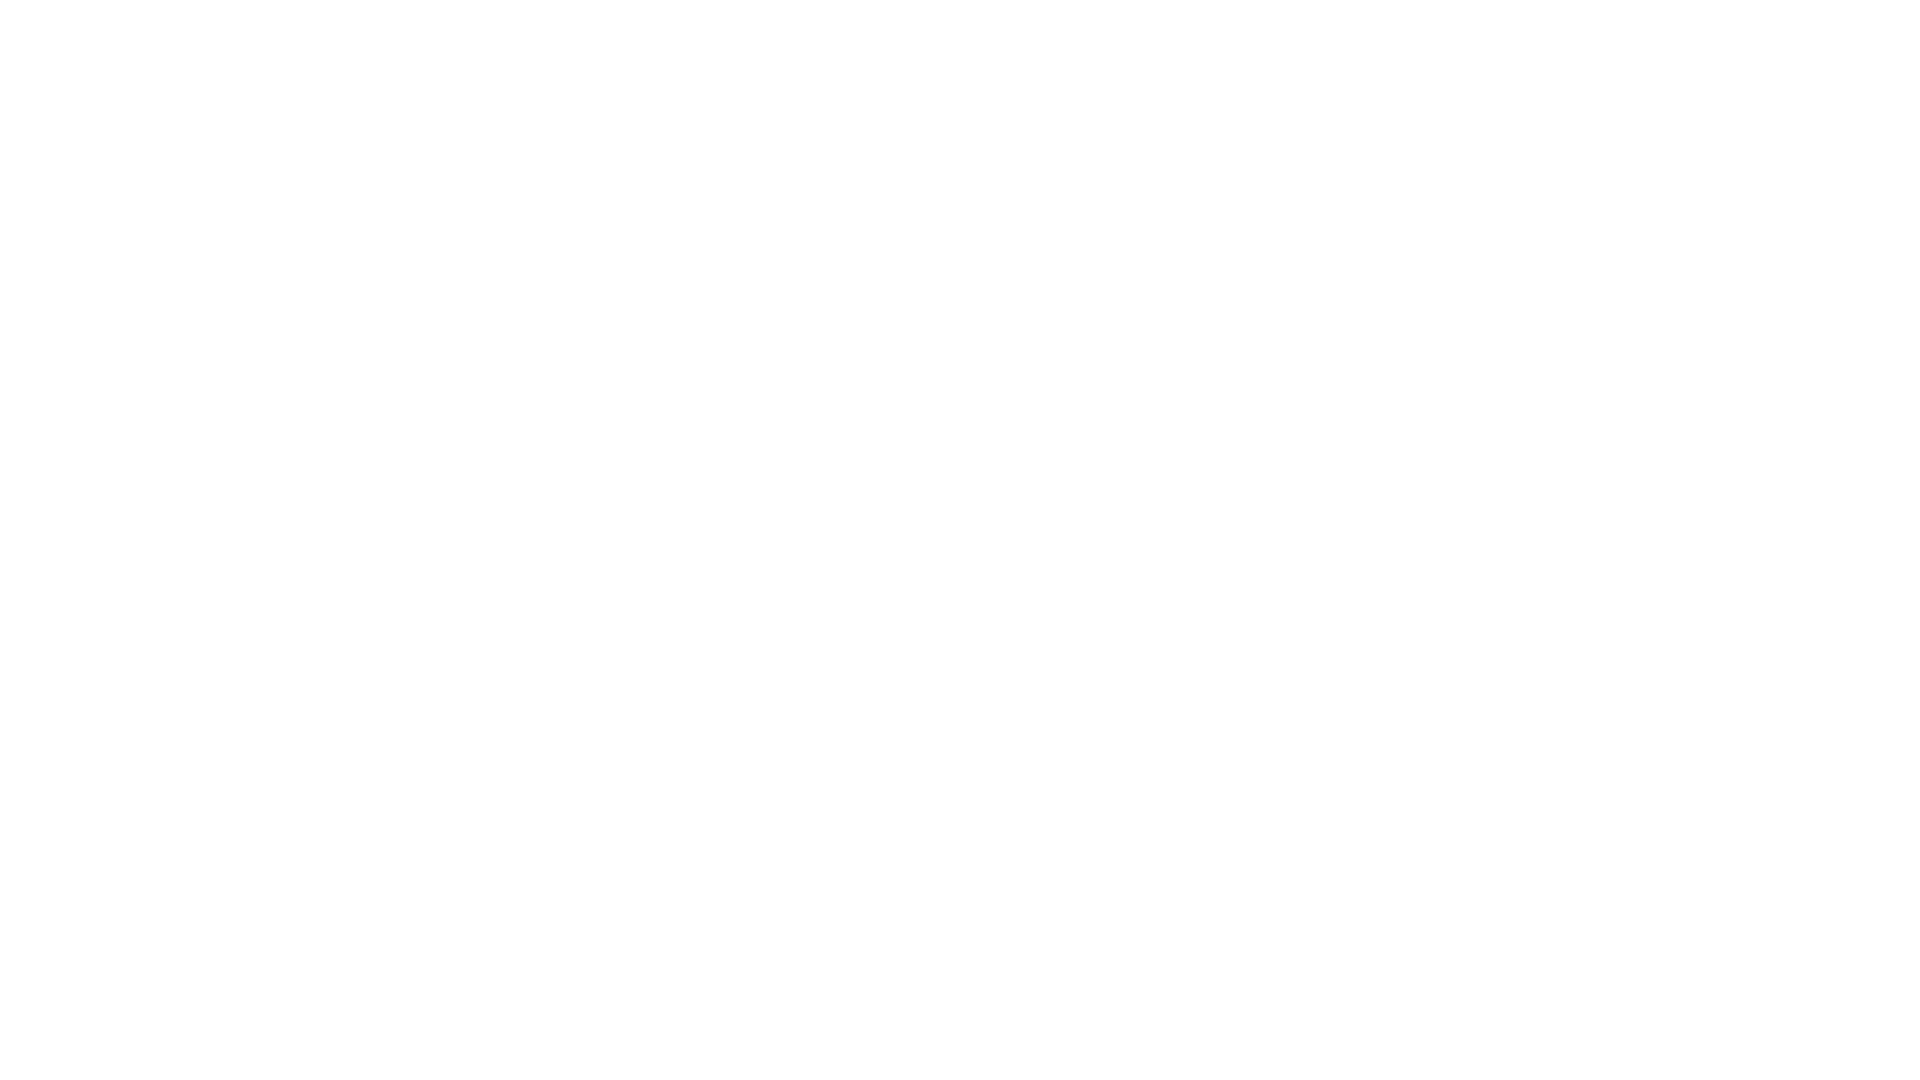 Cosehisa